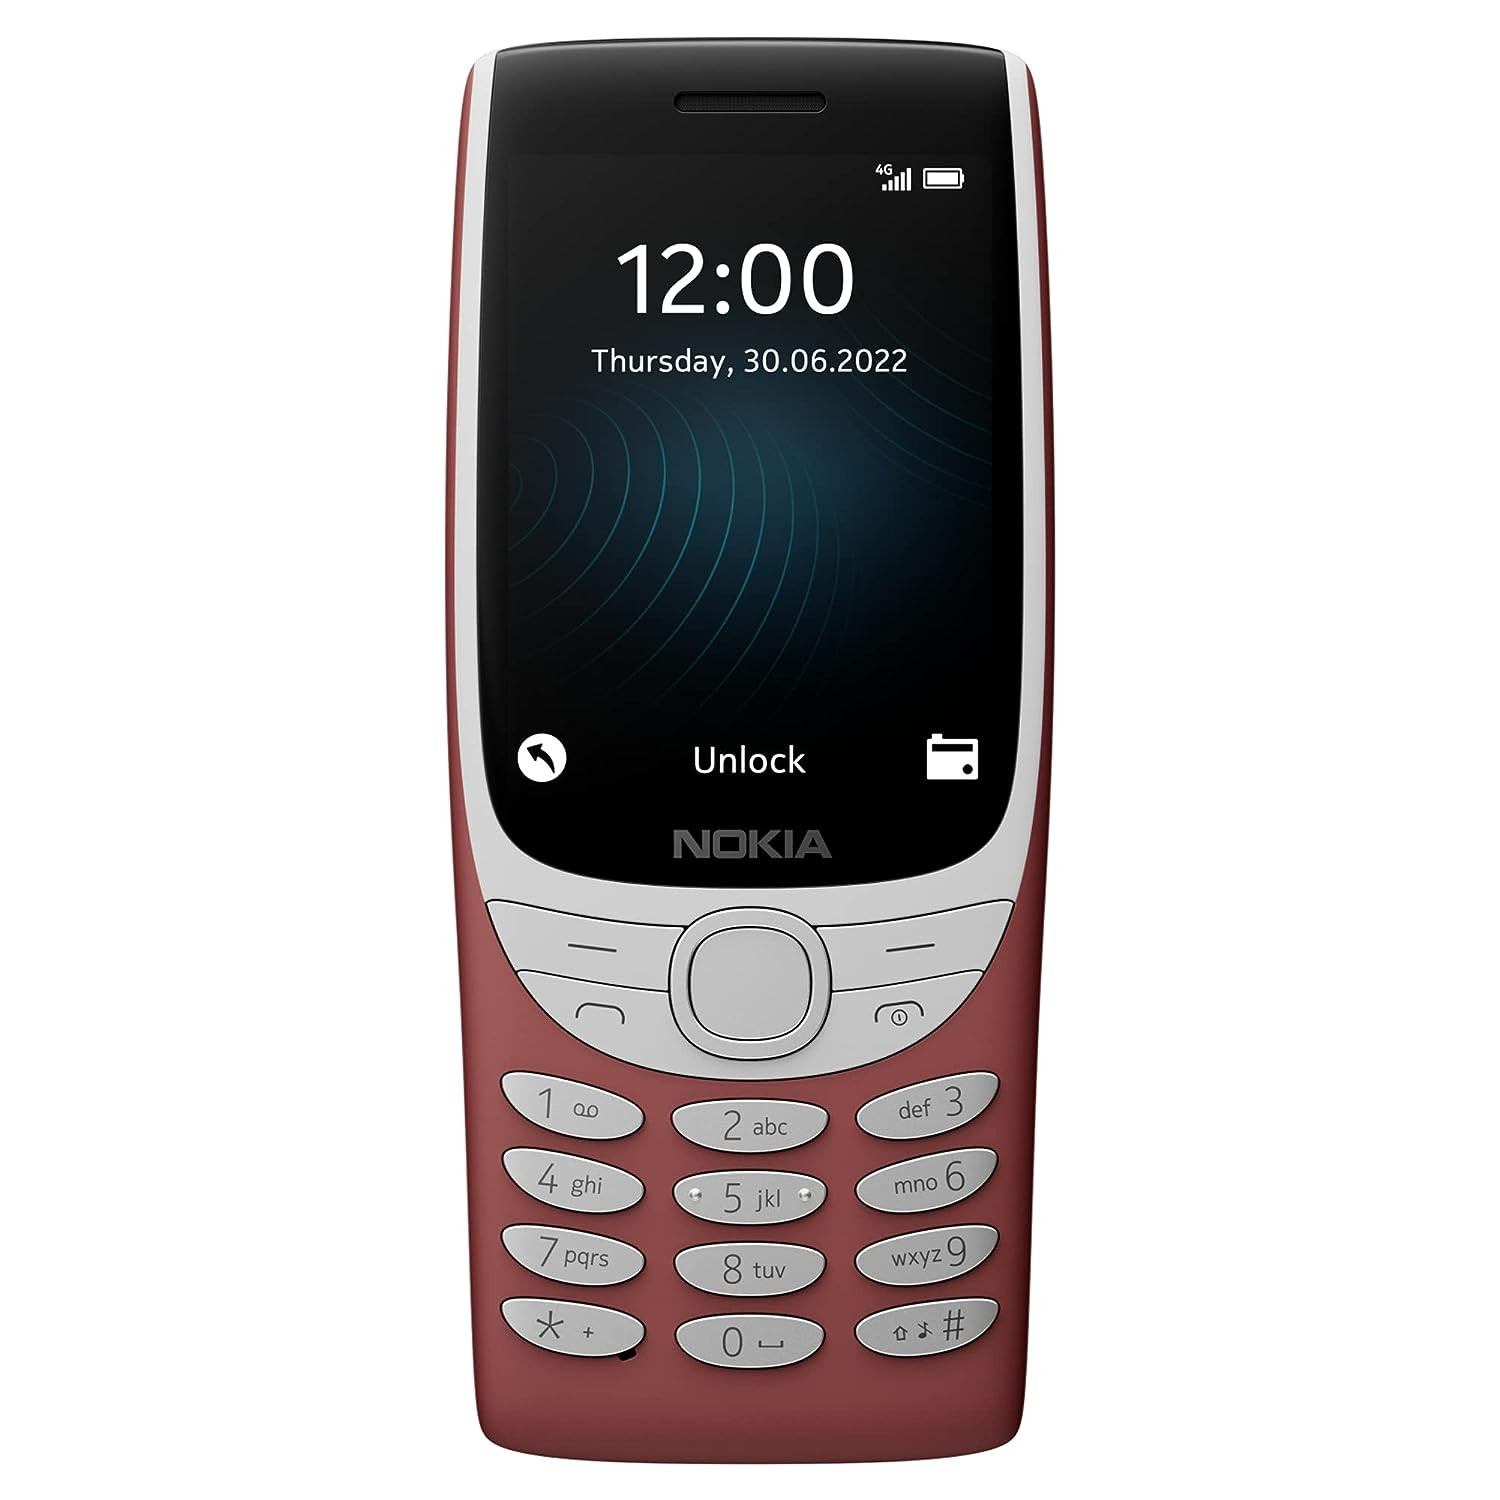 Nokia 8210 4G Volte keypad Phone with Dual SIM, Big Display, inbuilt MP3 Player & Wireless FM Radio | Red